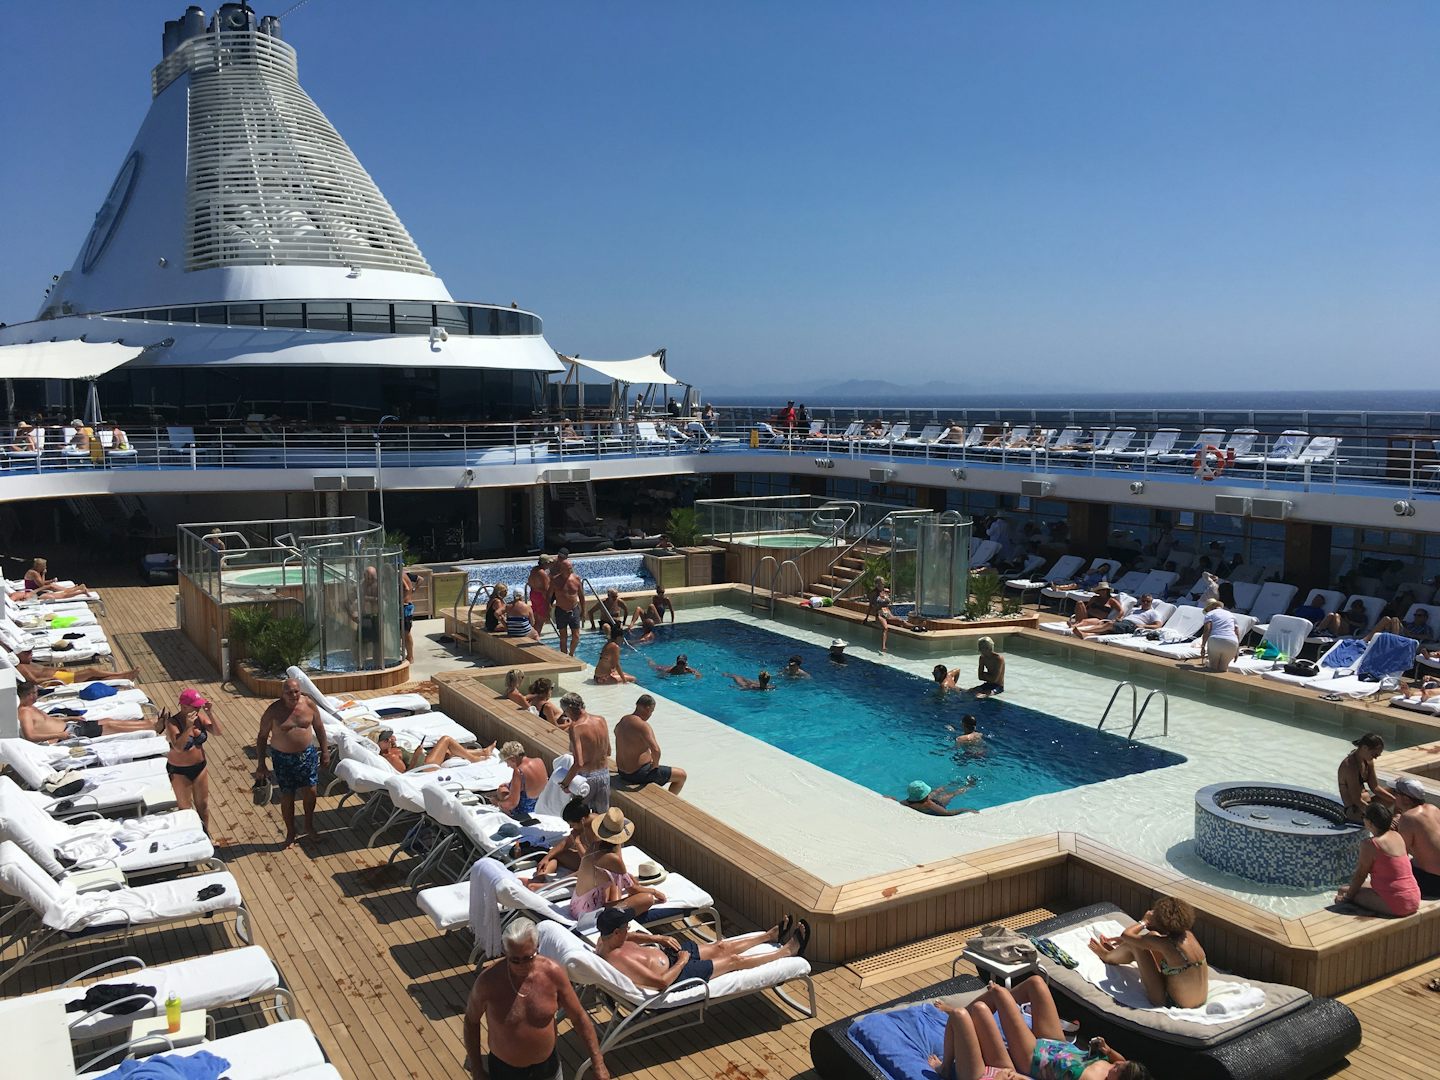 Oceania Riviera pool deck